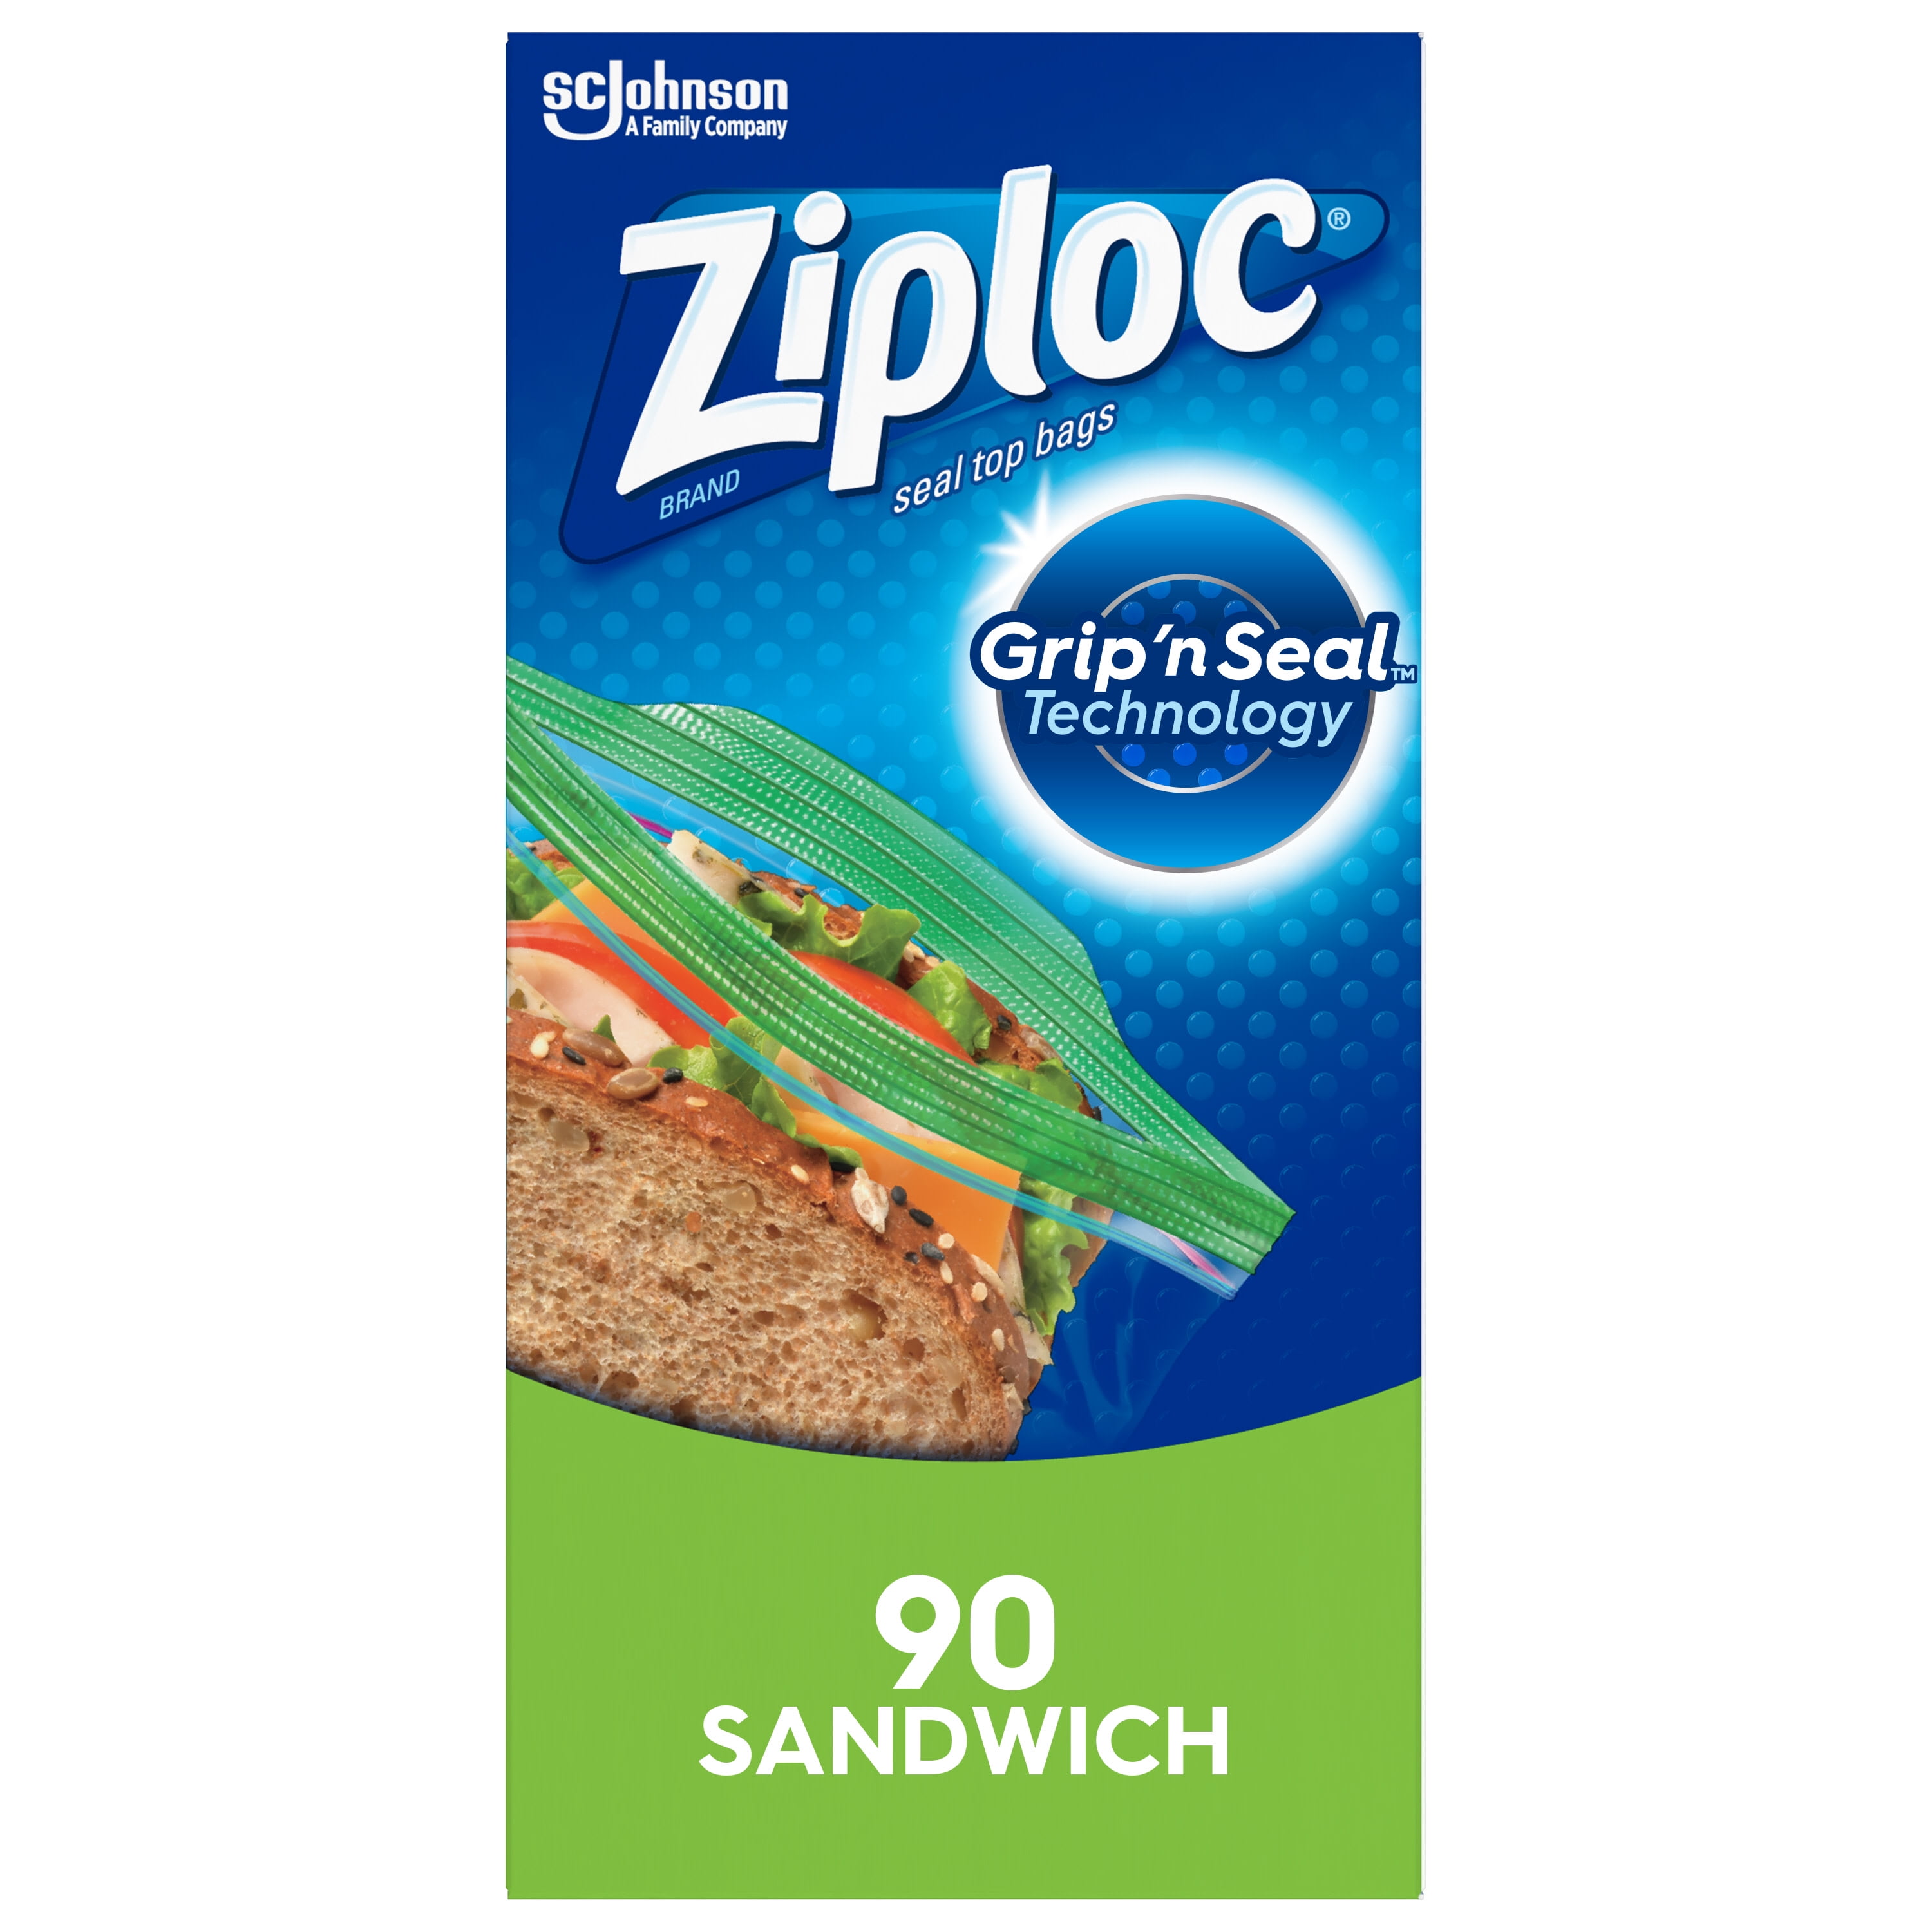 Ziploc® | Space Bag® Travel | Ziploc® brand | SC Johnson